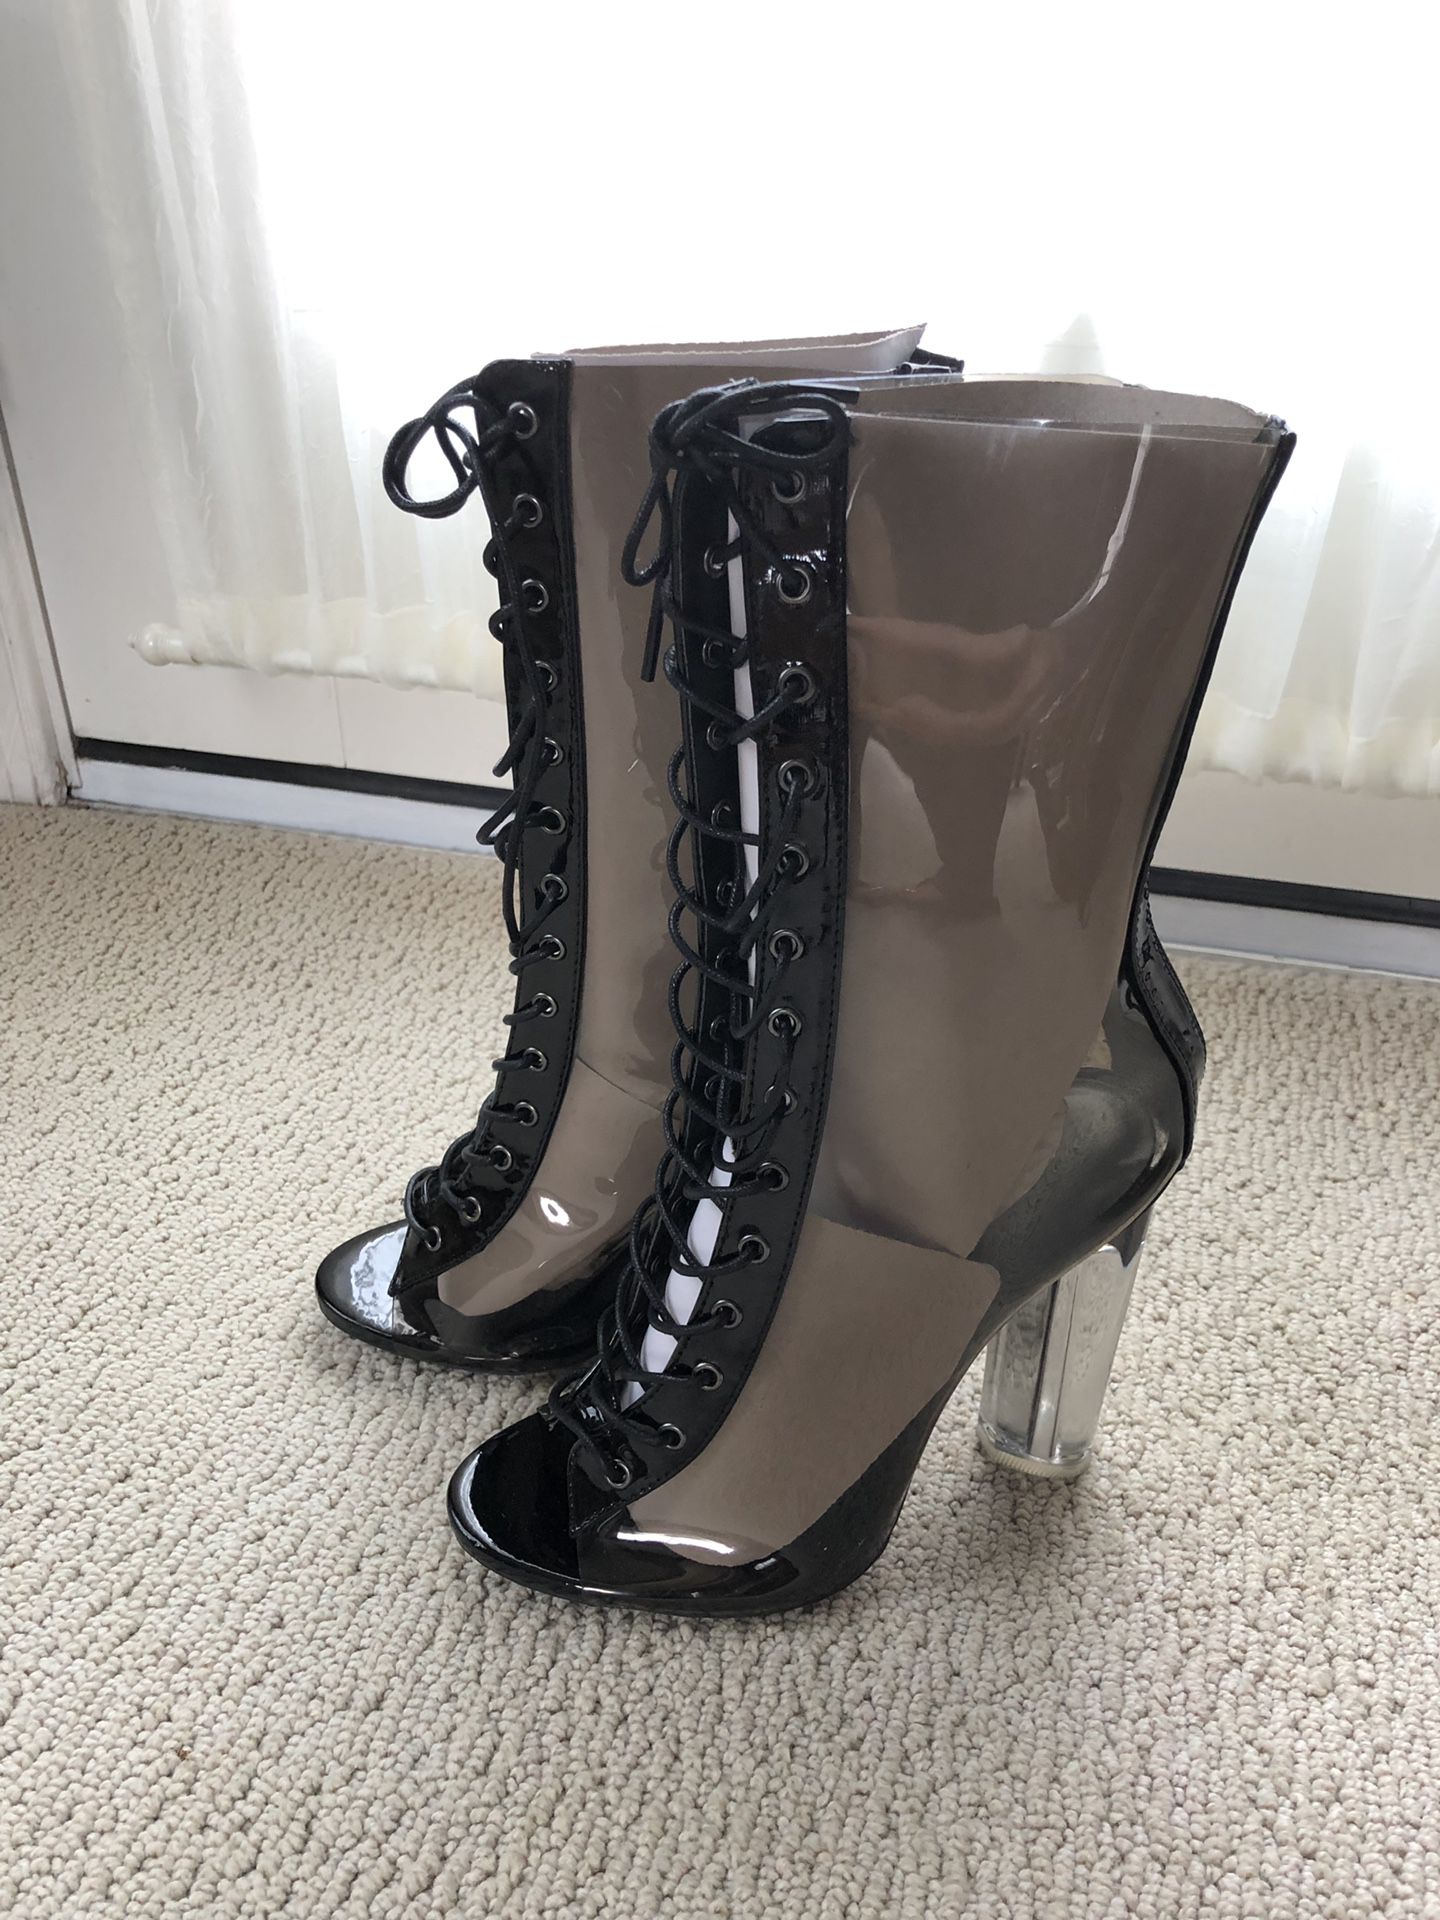 Size 7 booties, brand new, 4” tall acrylic heel